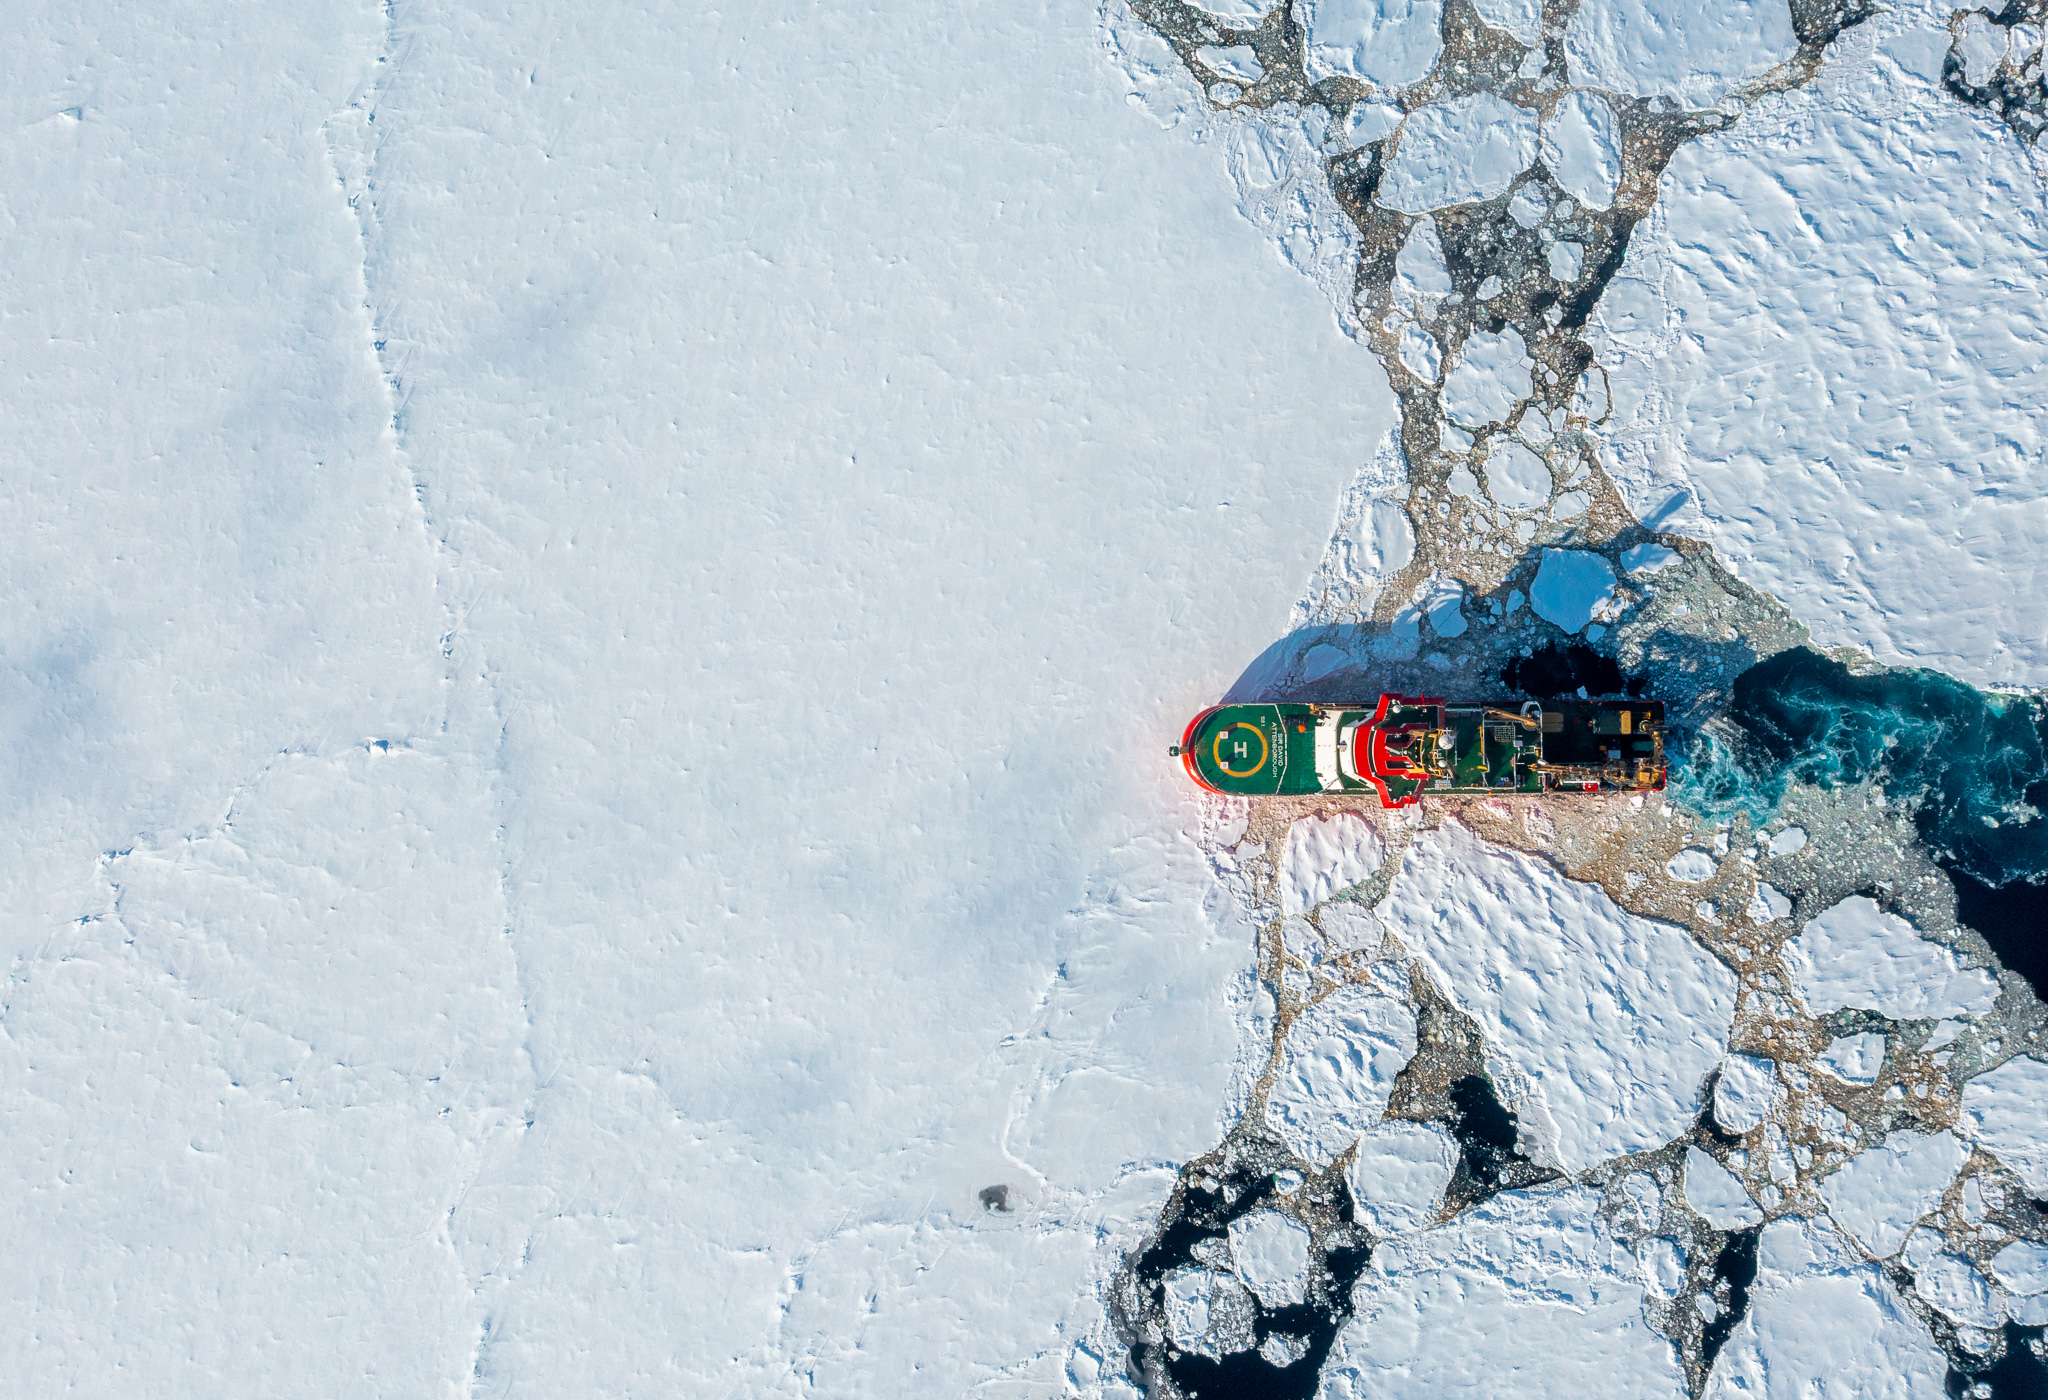 RRS Sir David Attenborough completes ice trials